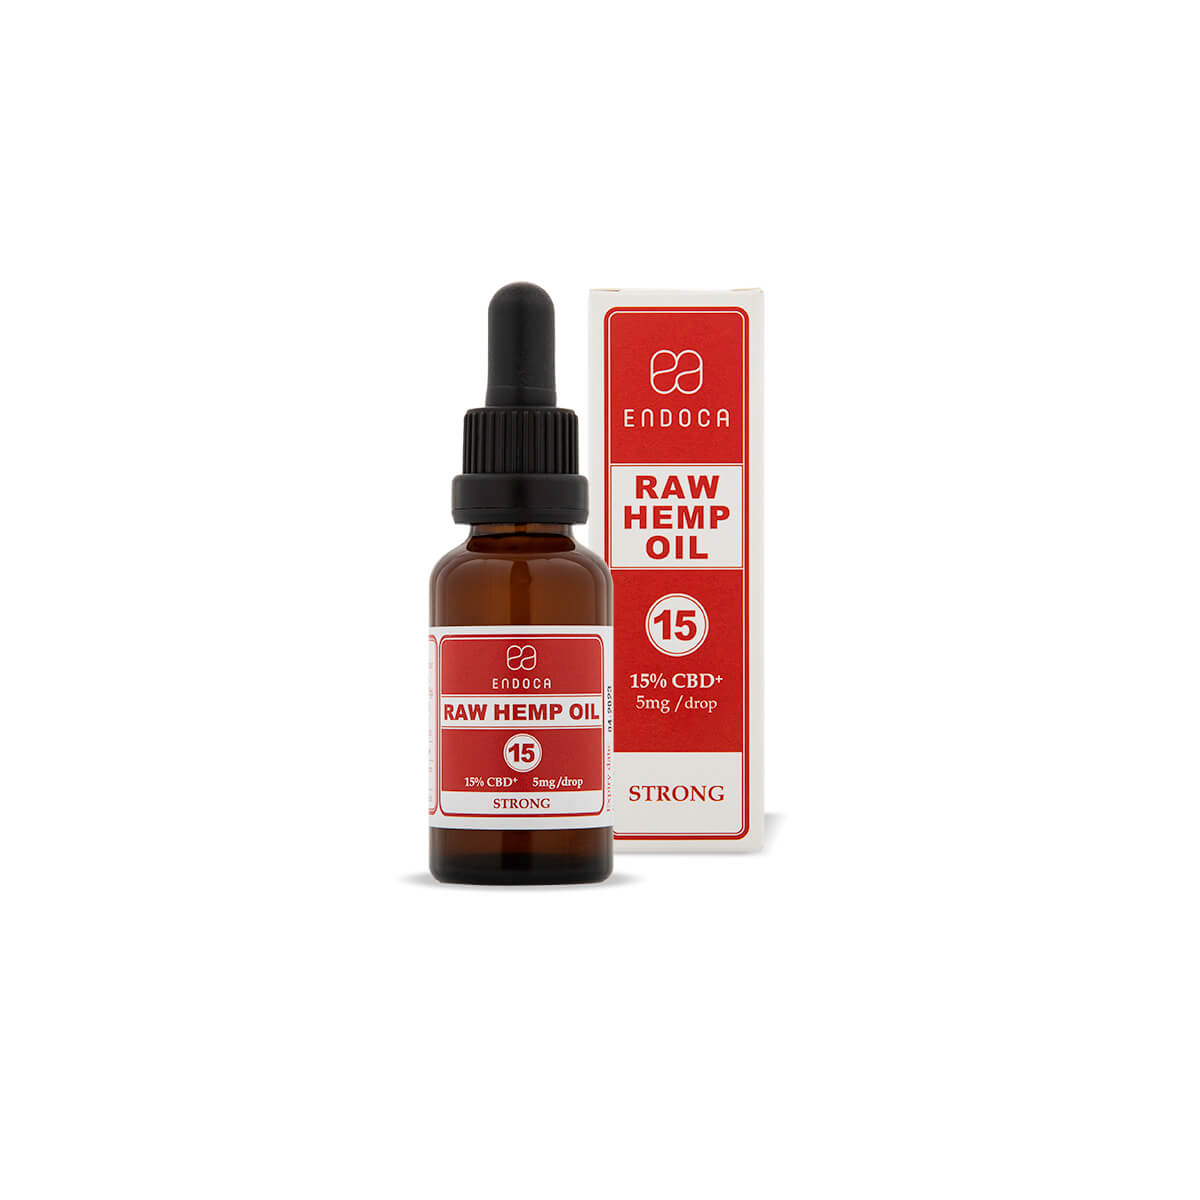 Endoca Raw Hemp Oil Drops 5mg per drop 30ml Bottle/4500 mg